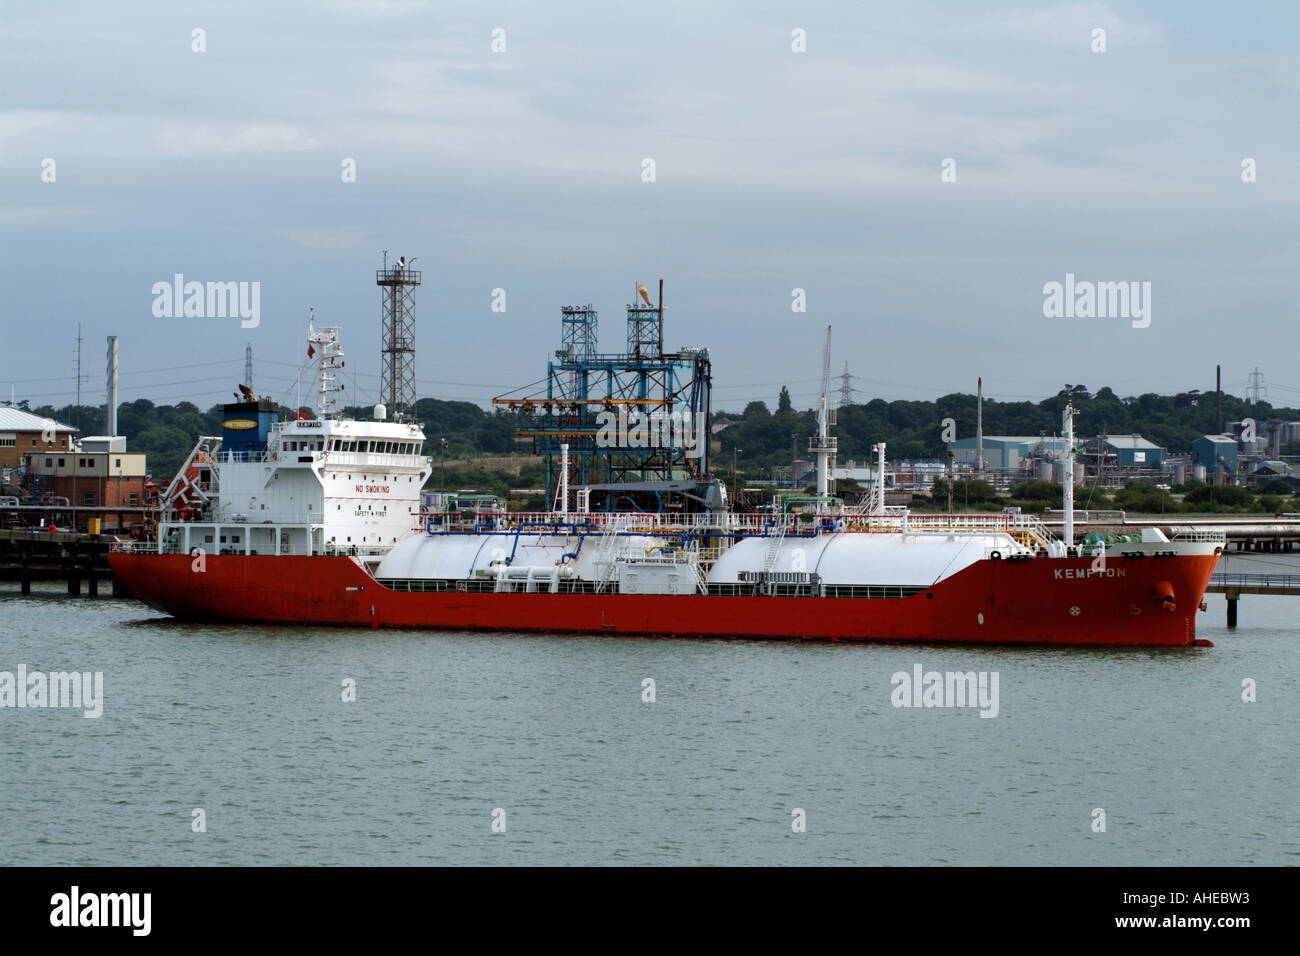 Kempton ein LPG-Massengutfrachter Schiff in Fawley am Southampton Water südlichen England UK Stockfoto